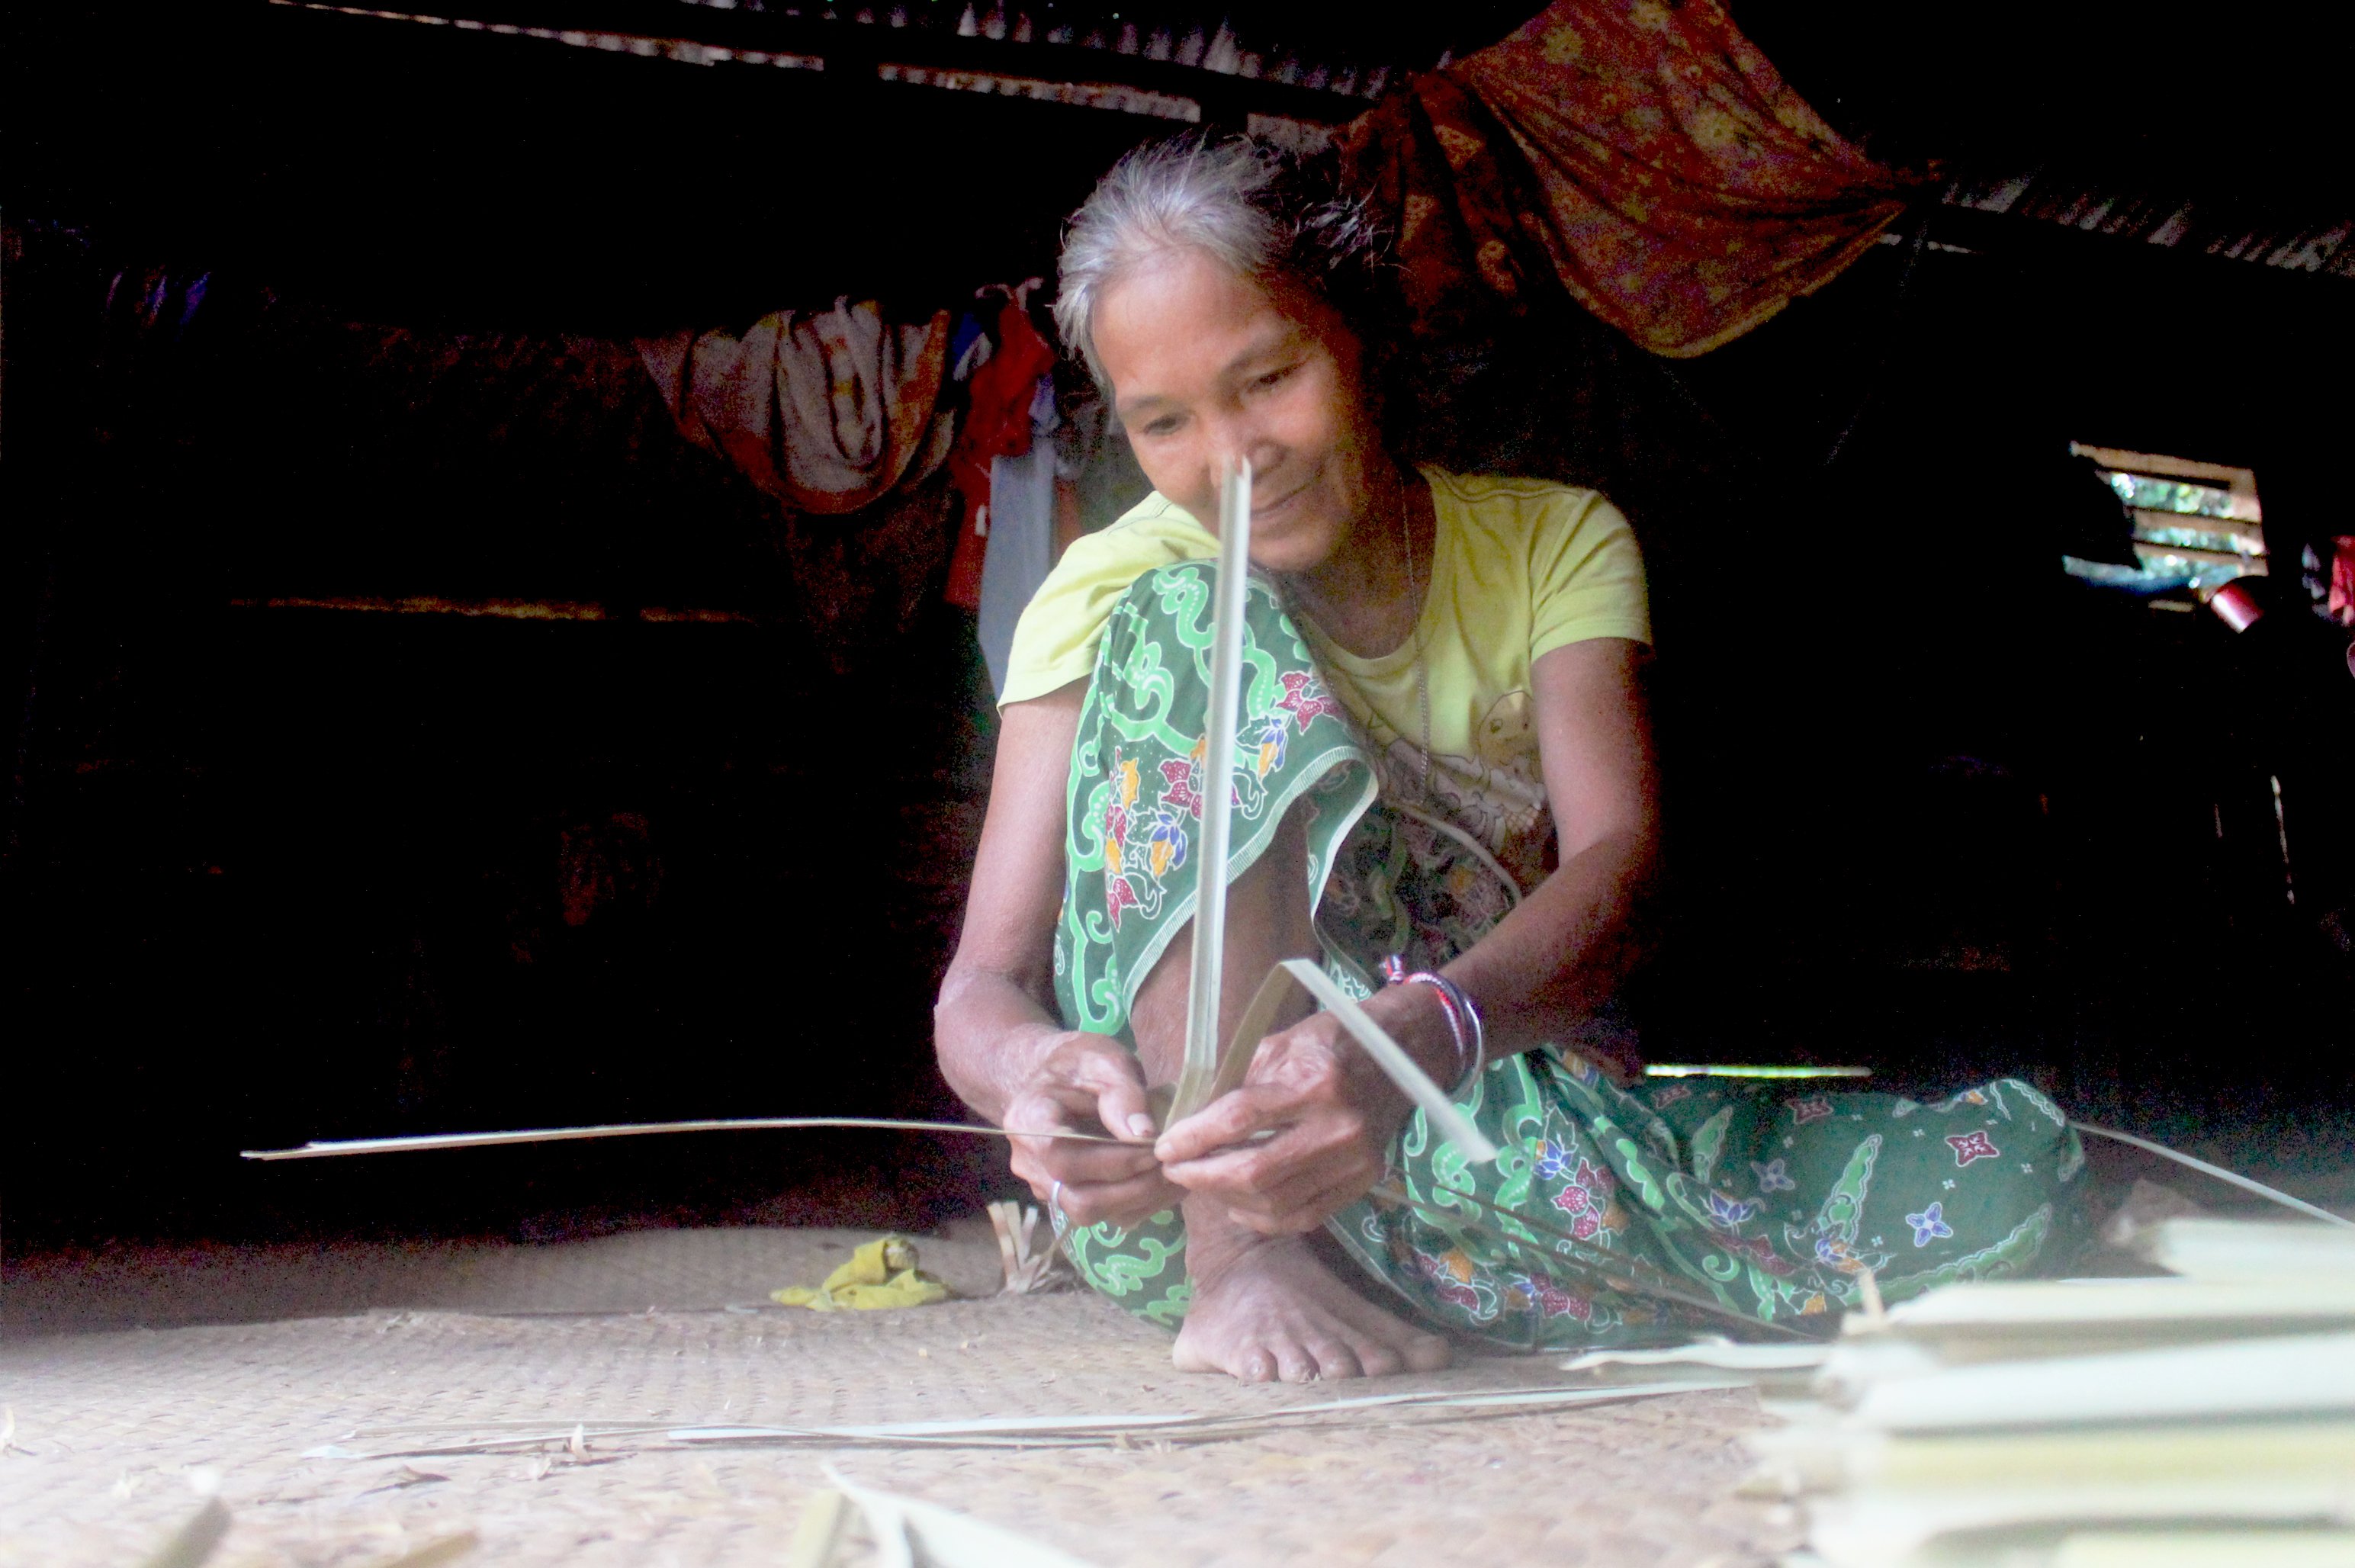 Mat weaving in Central Sumatra